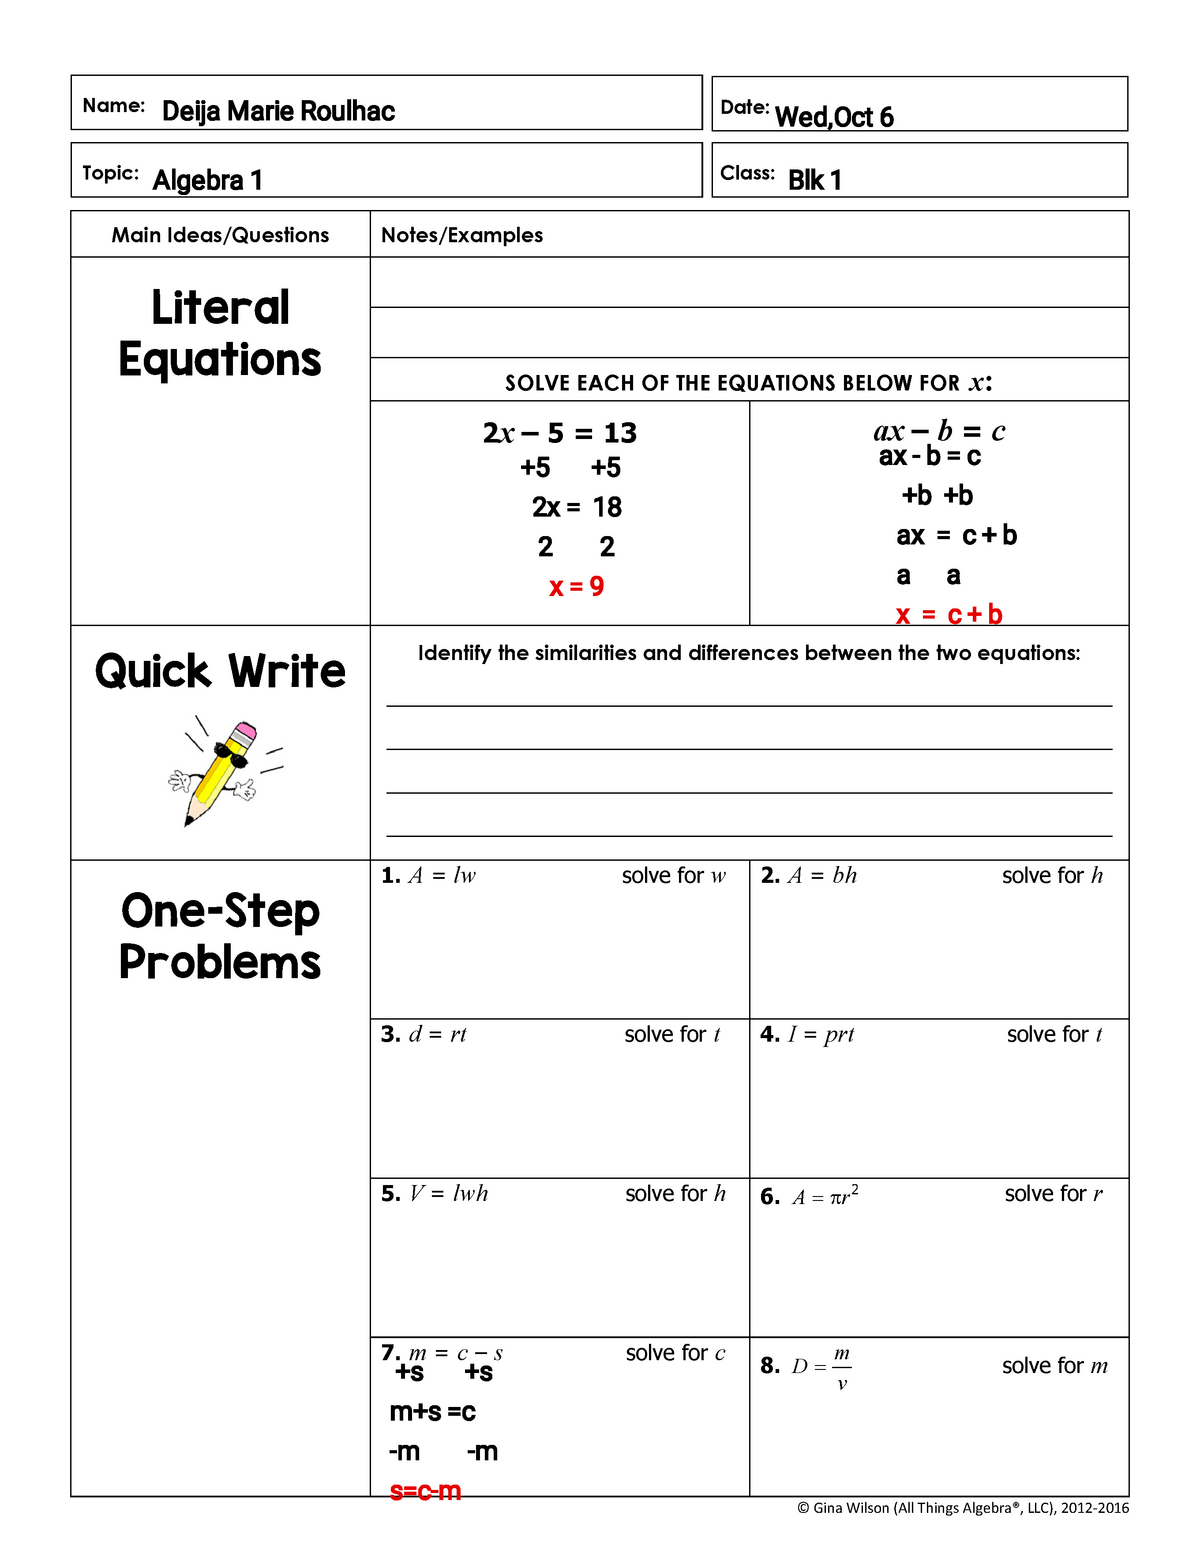 unit 2 homework 6 literal equations answer key